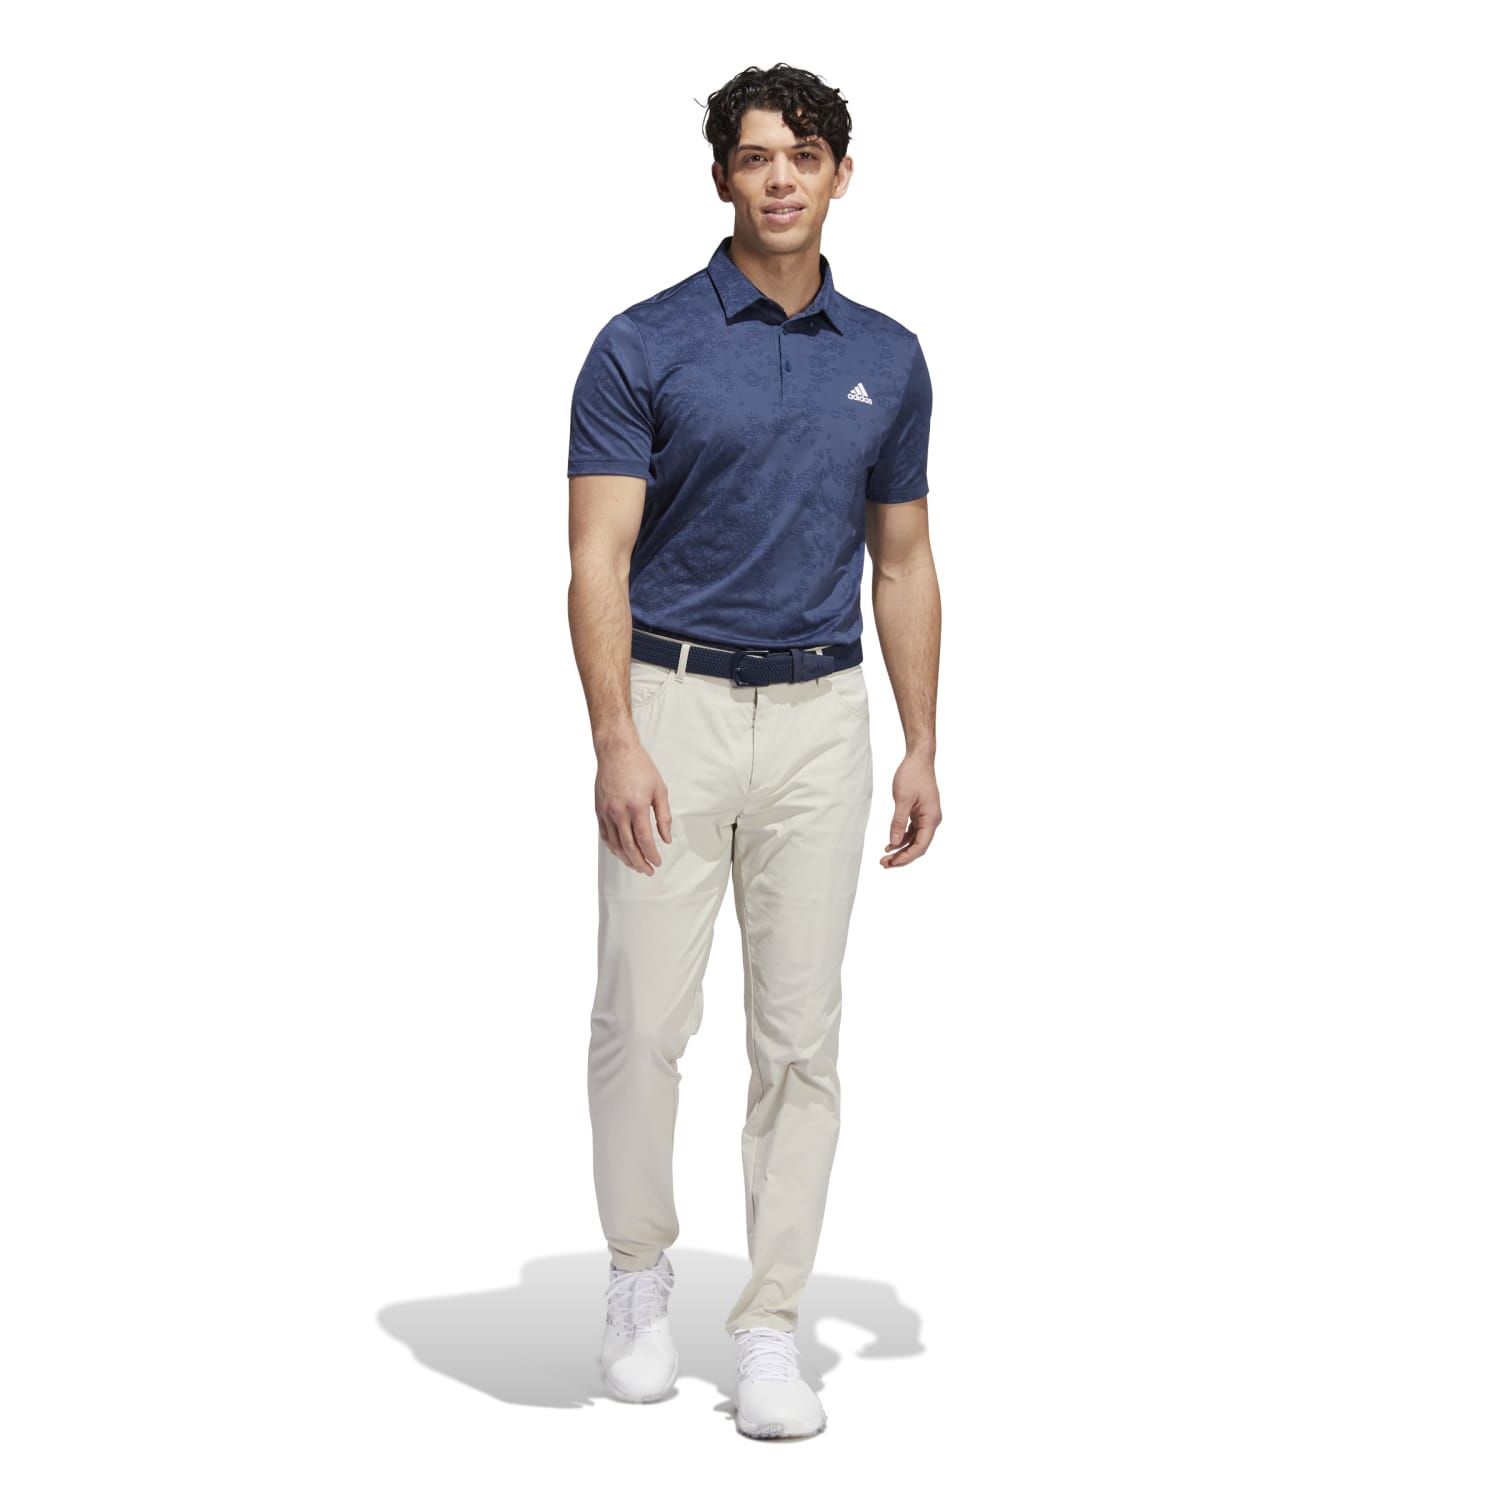 adidas Jacquard Golf Polo Shirt 